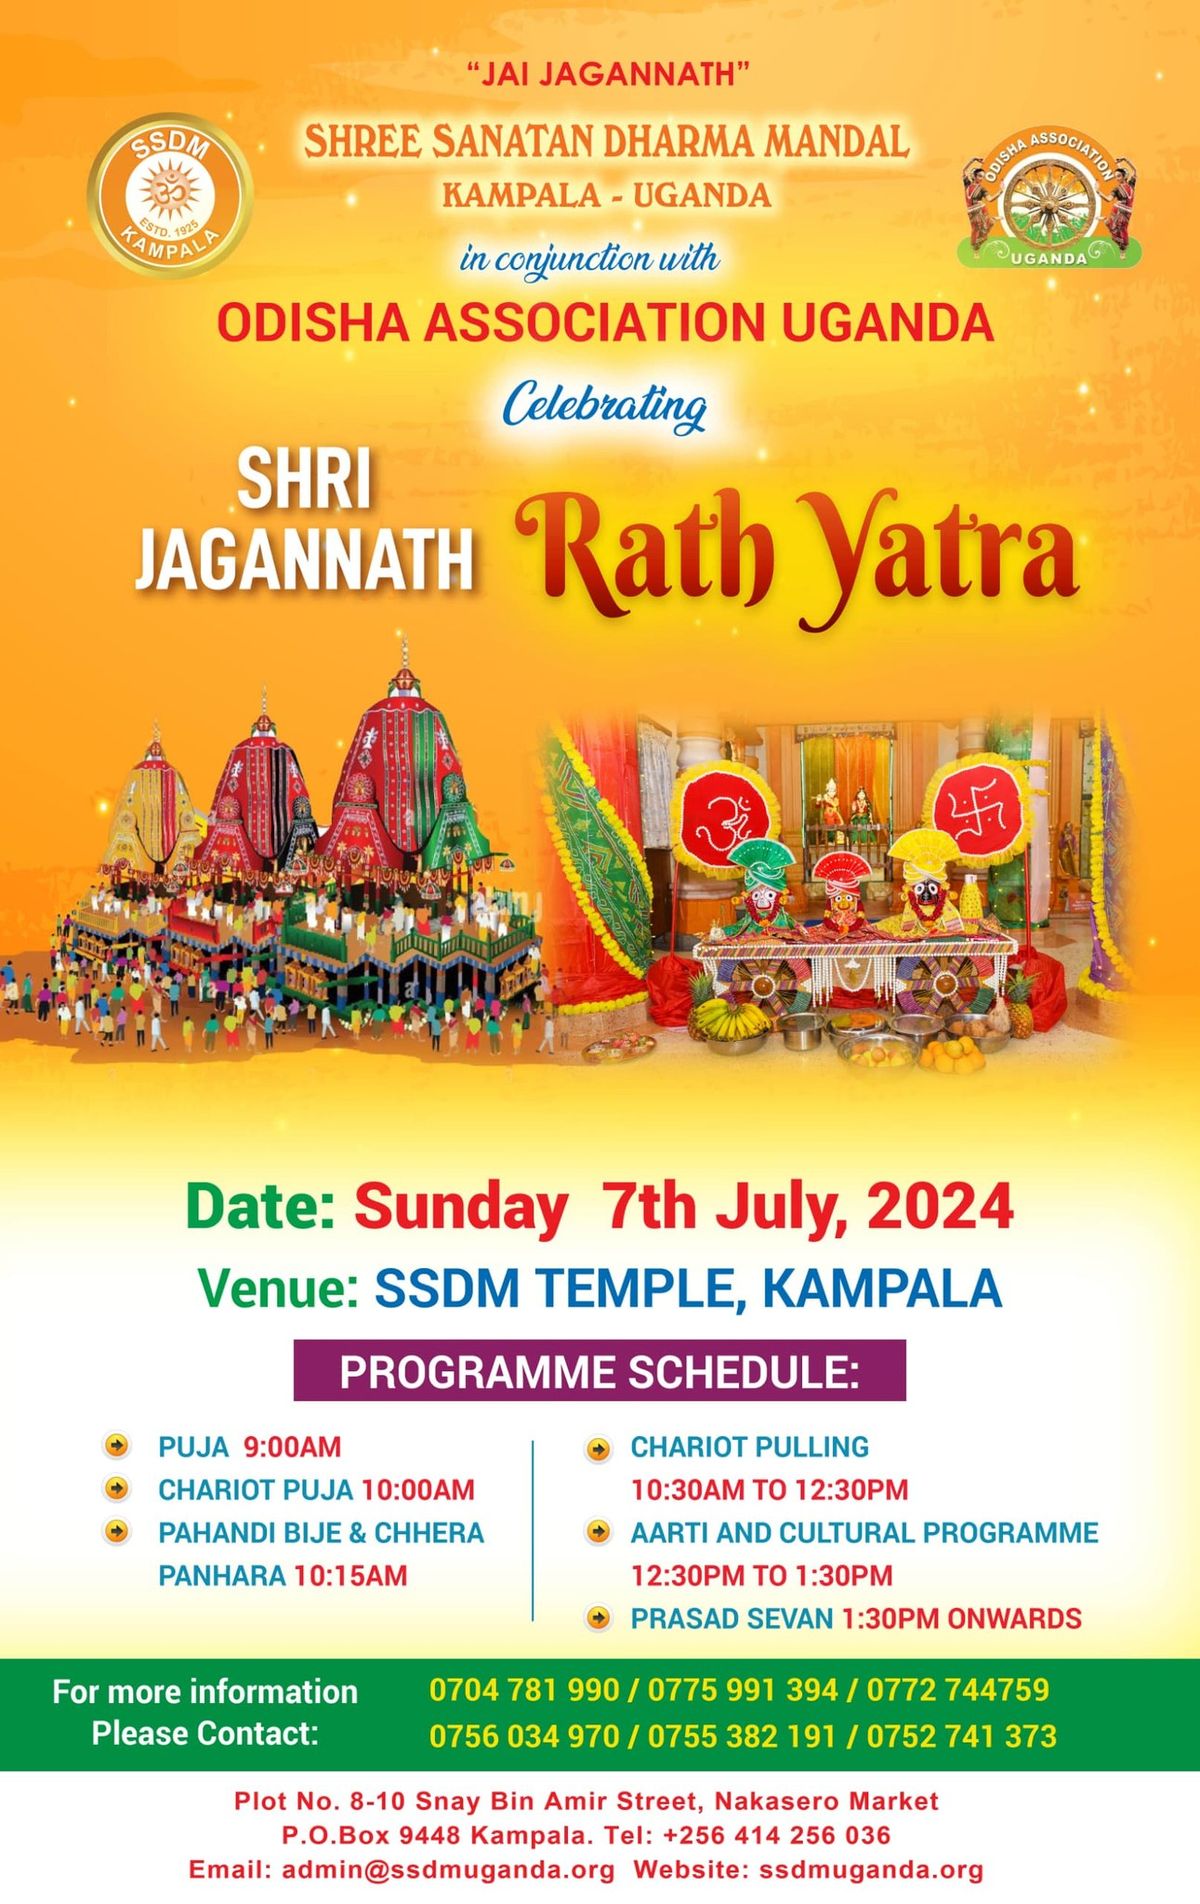 Lord Jagannath Rath Yatra Celebrations